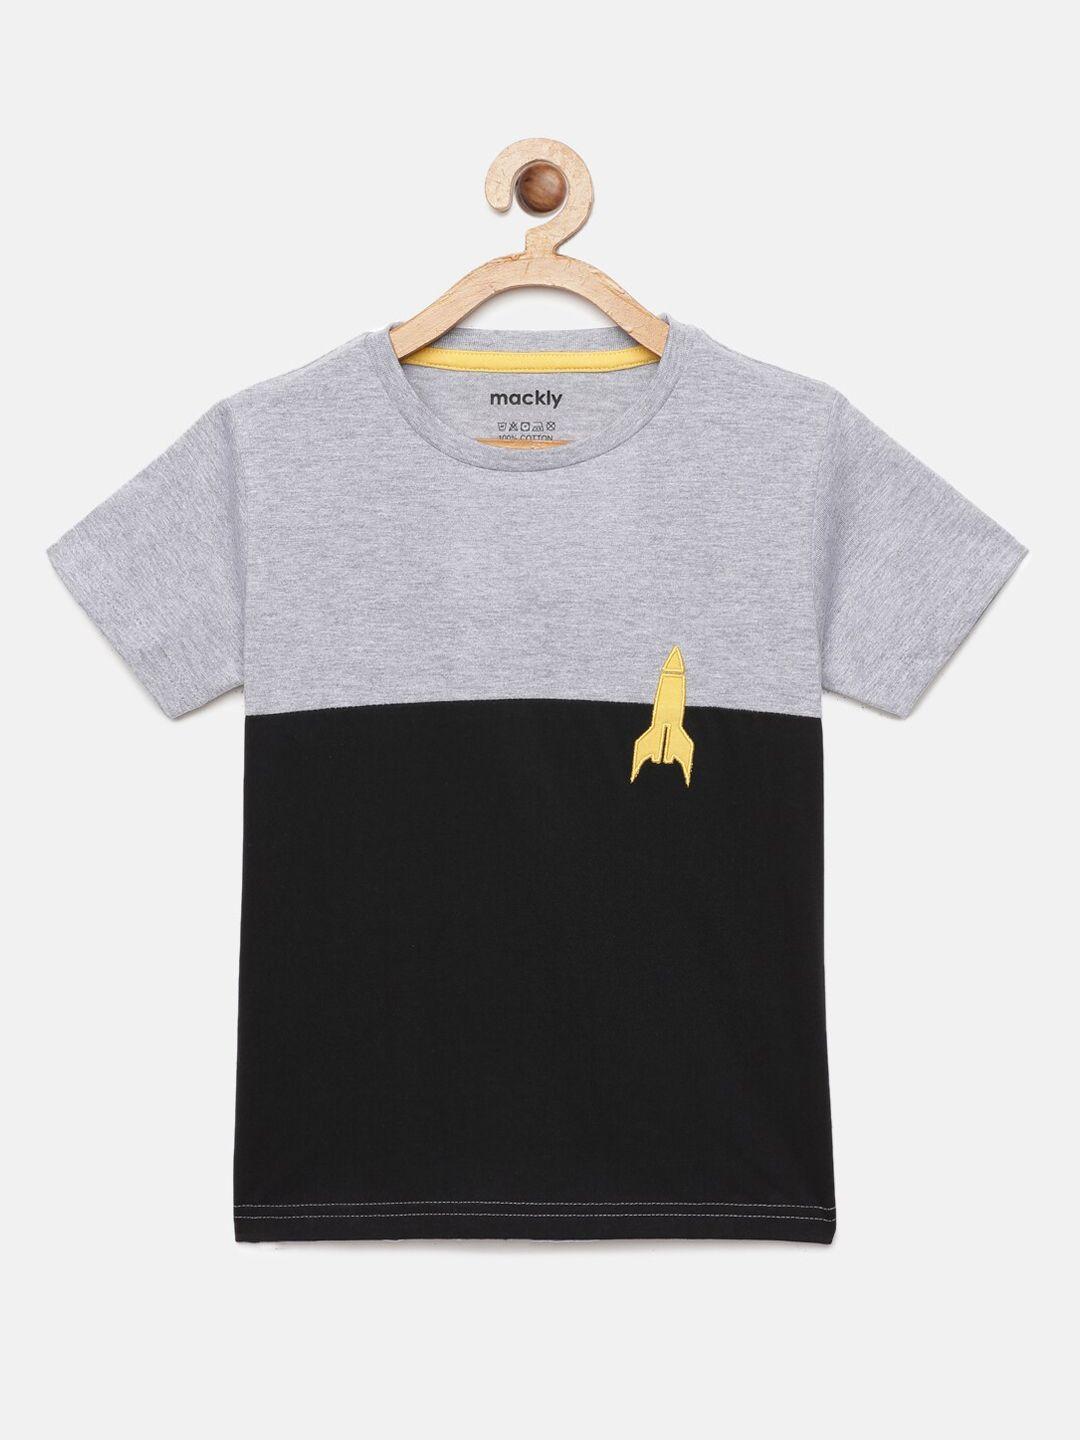 mackly boys black & grey melange colourblocked cotton lounge t-shirt